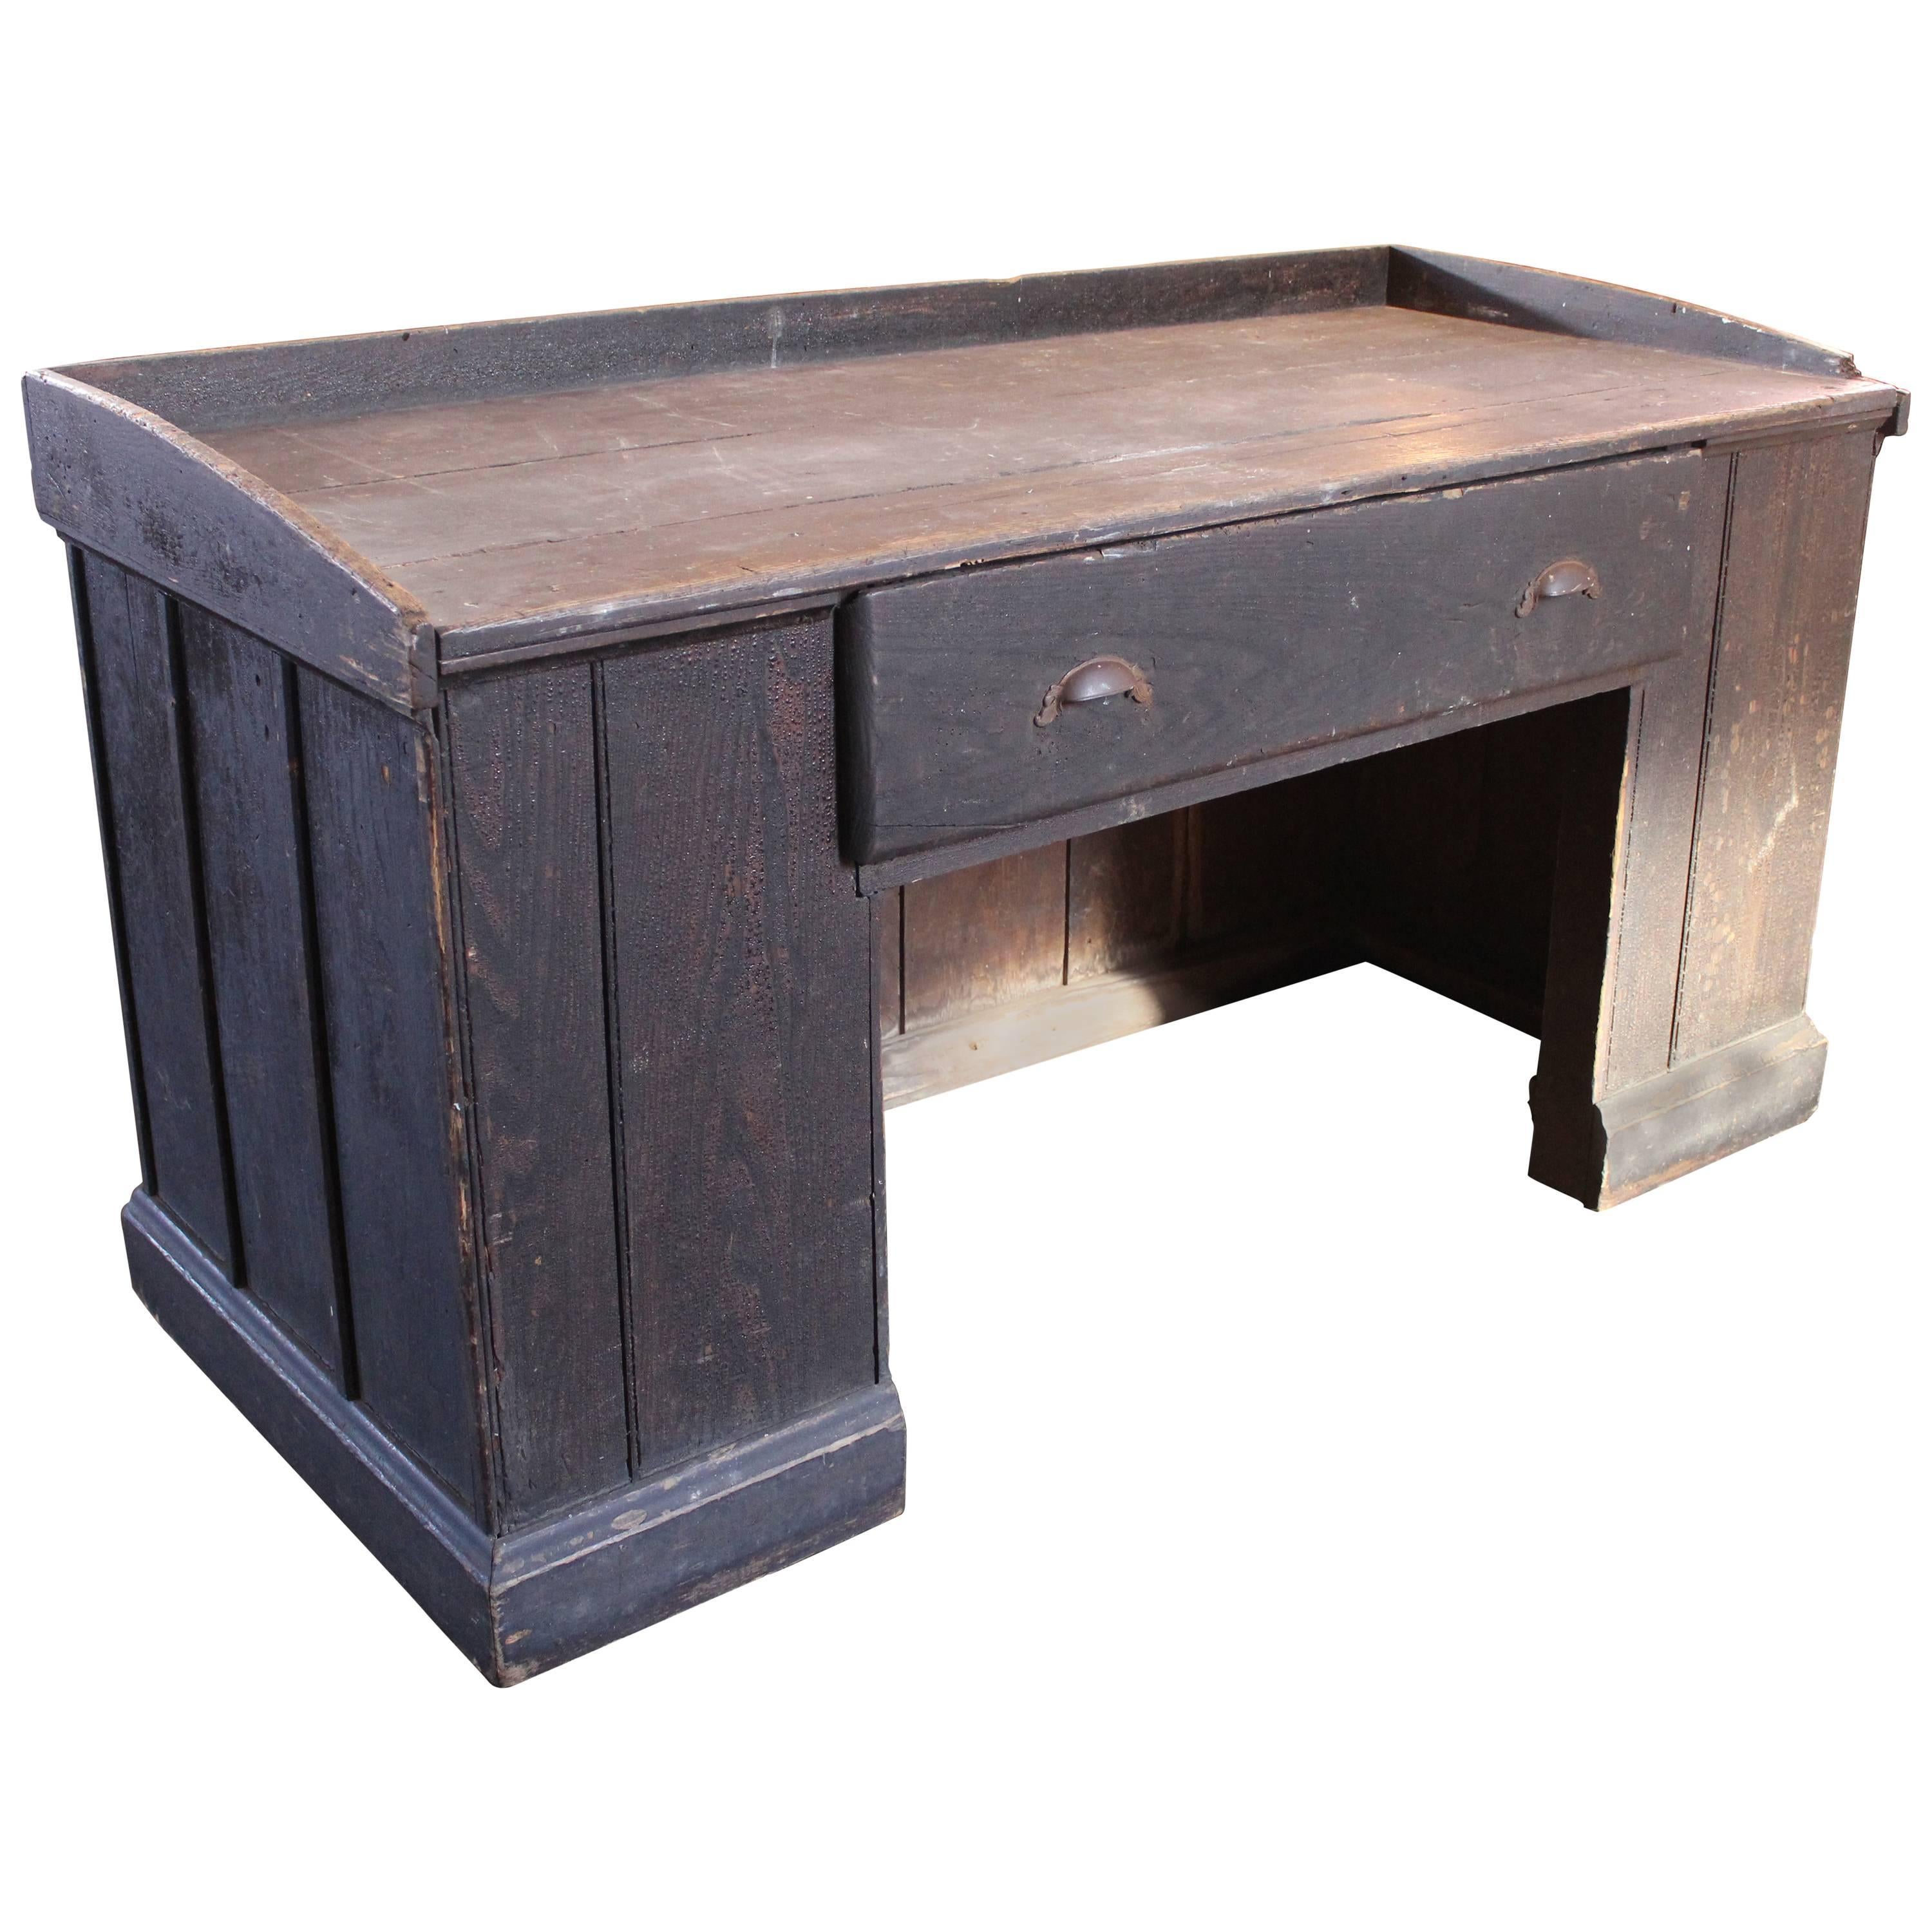 Vintage Industrial Wooden Hardware Store Counter, Clerk's Desk Table